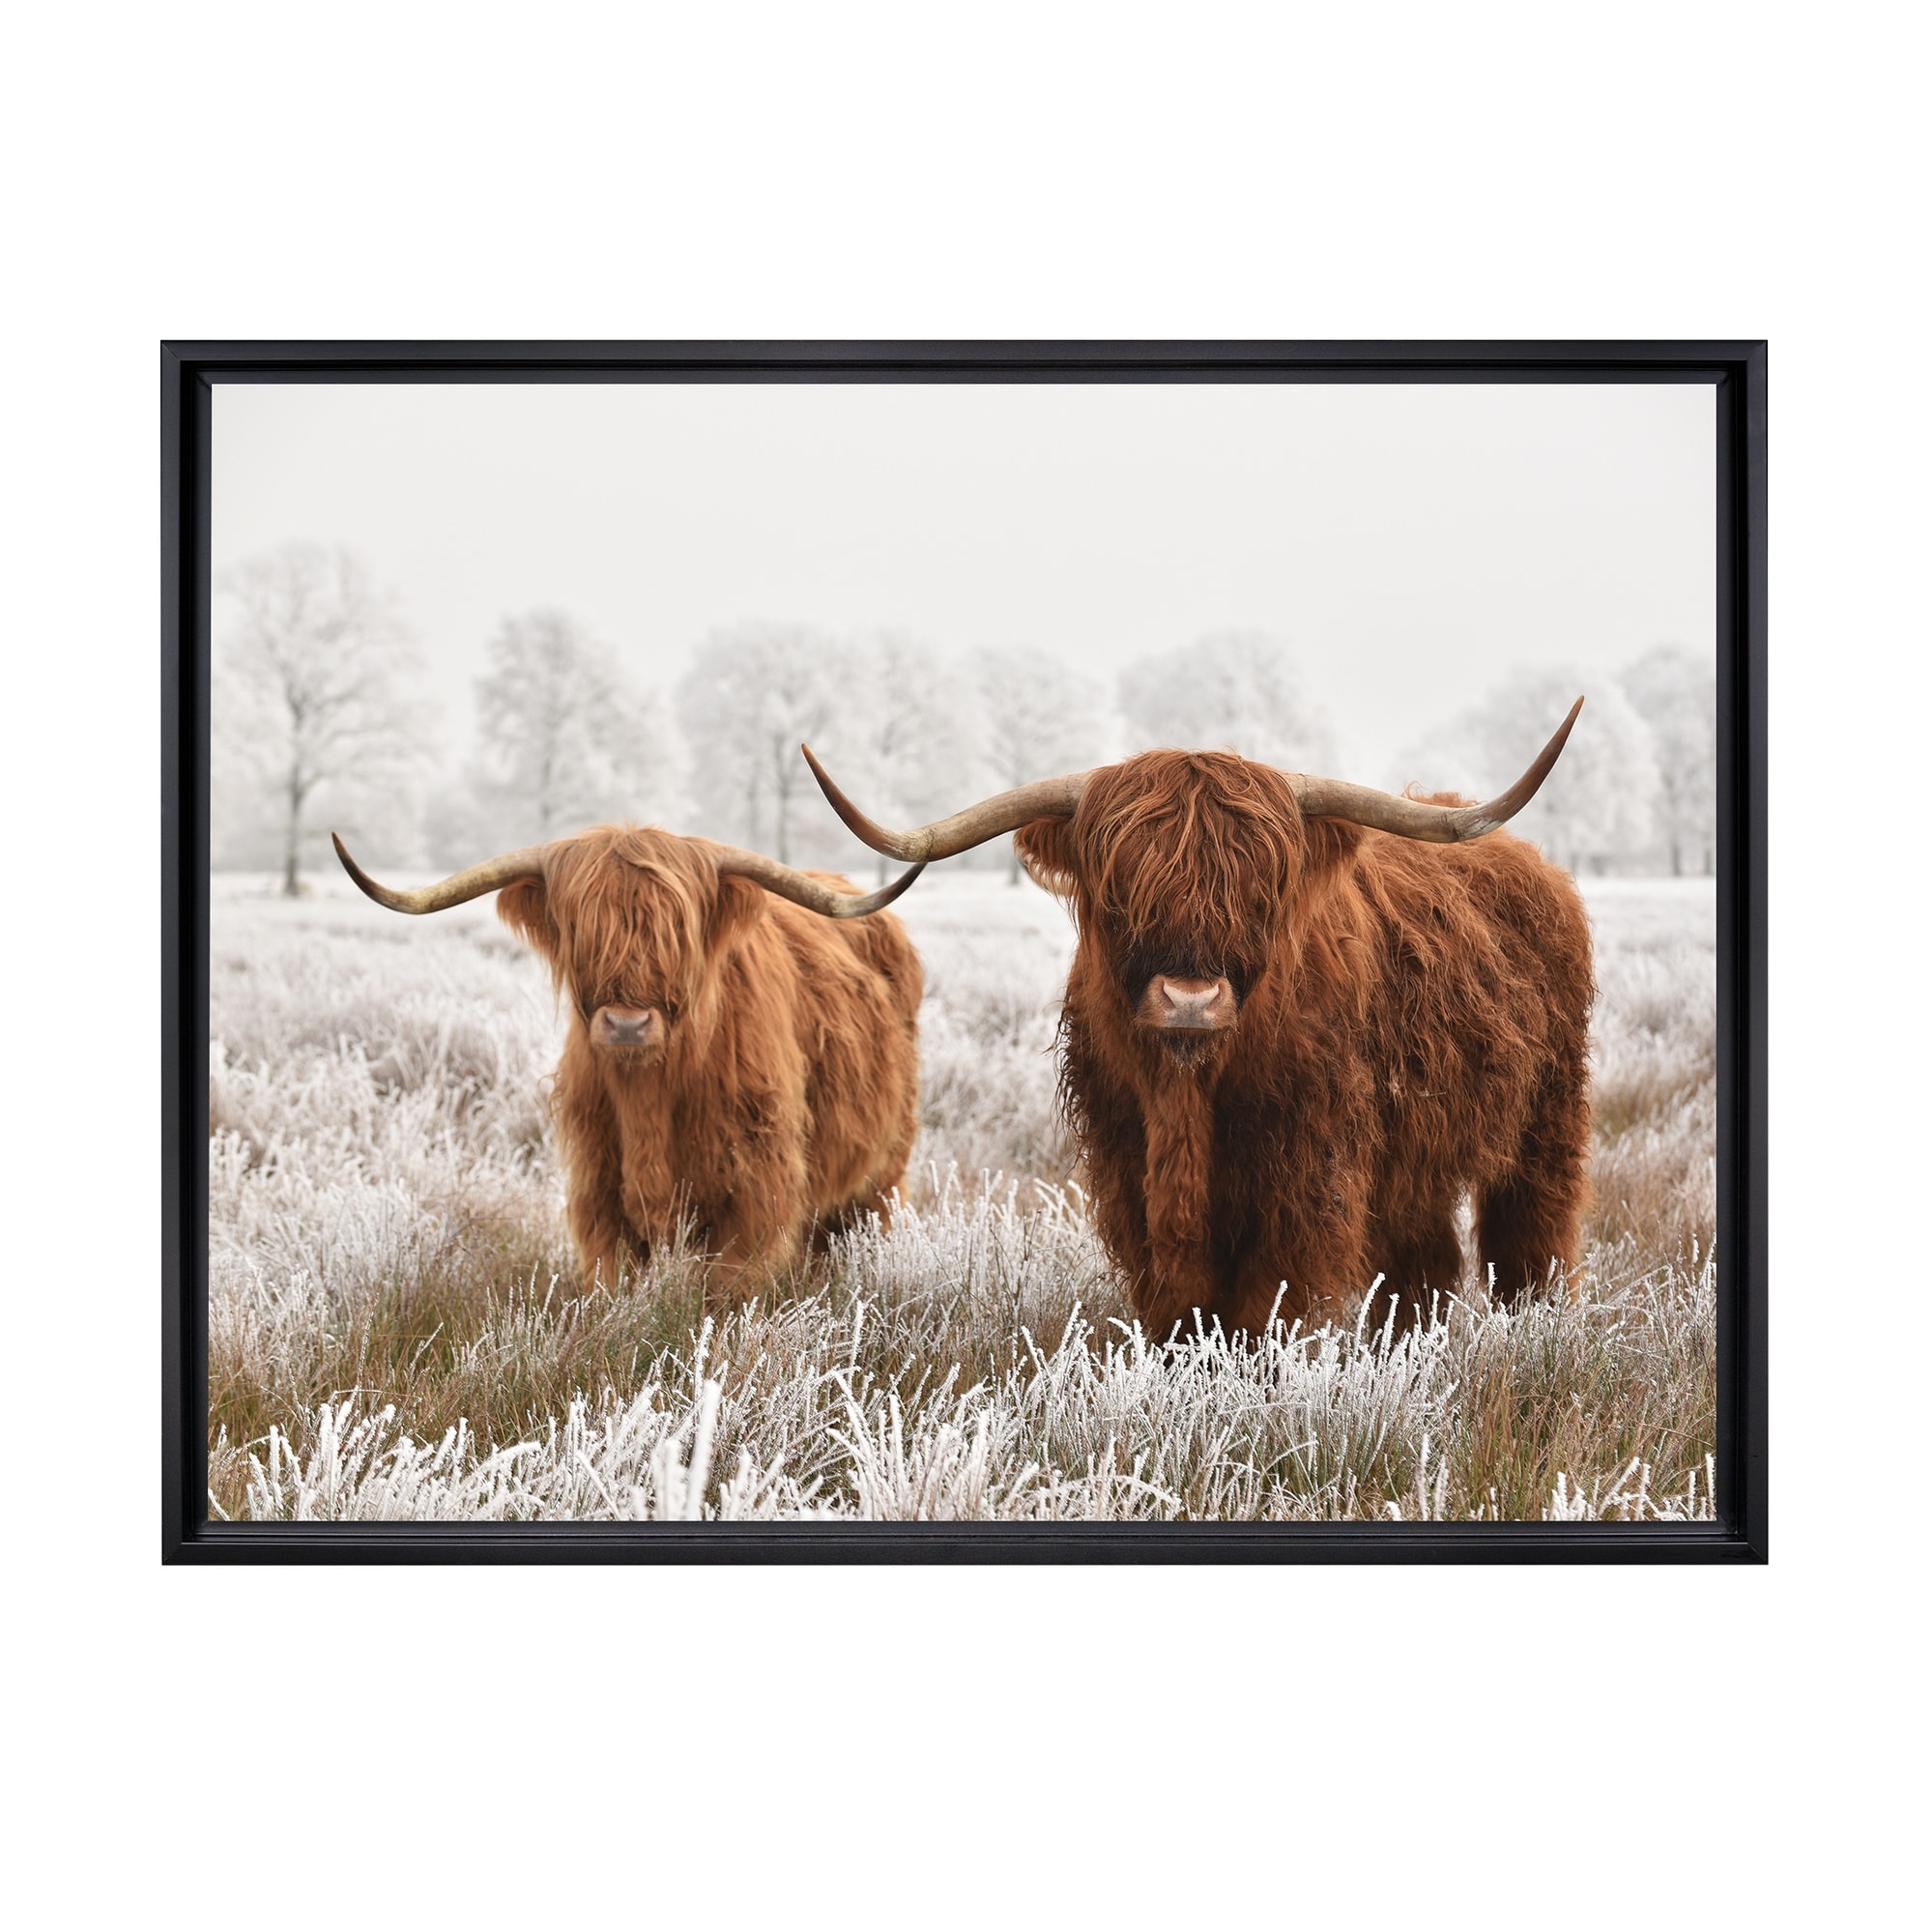 Stratton Home Decor Highland Cattle Framed Canvas Wall Art Black Bed  Bath  Beyond 37855470